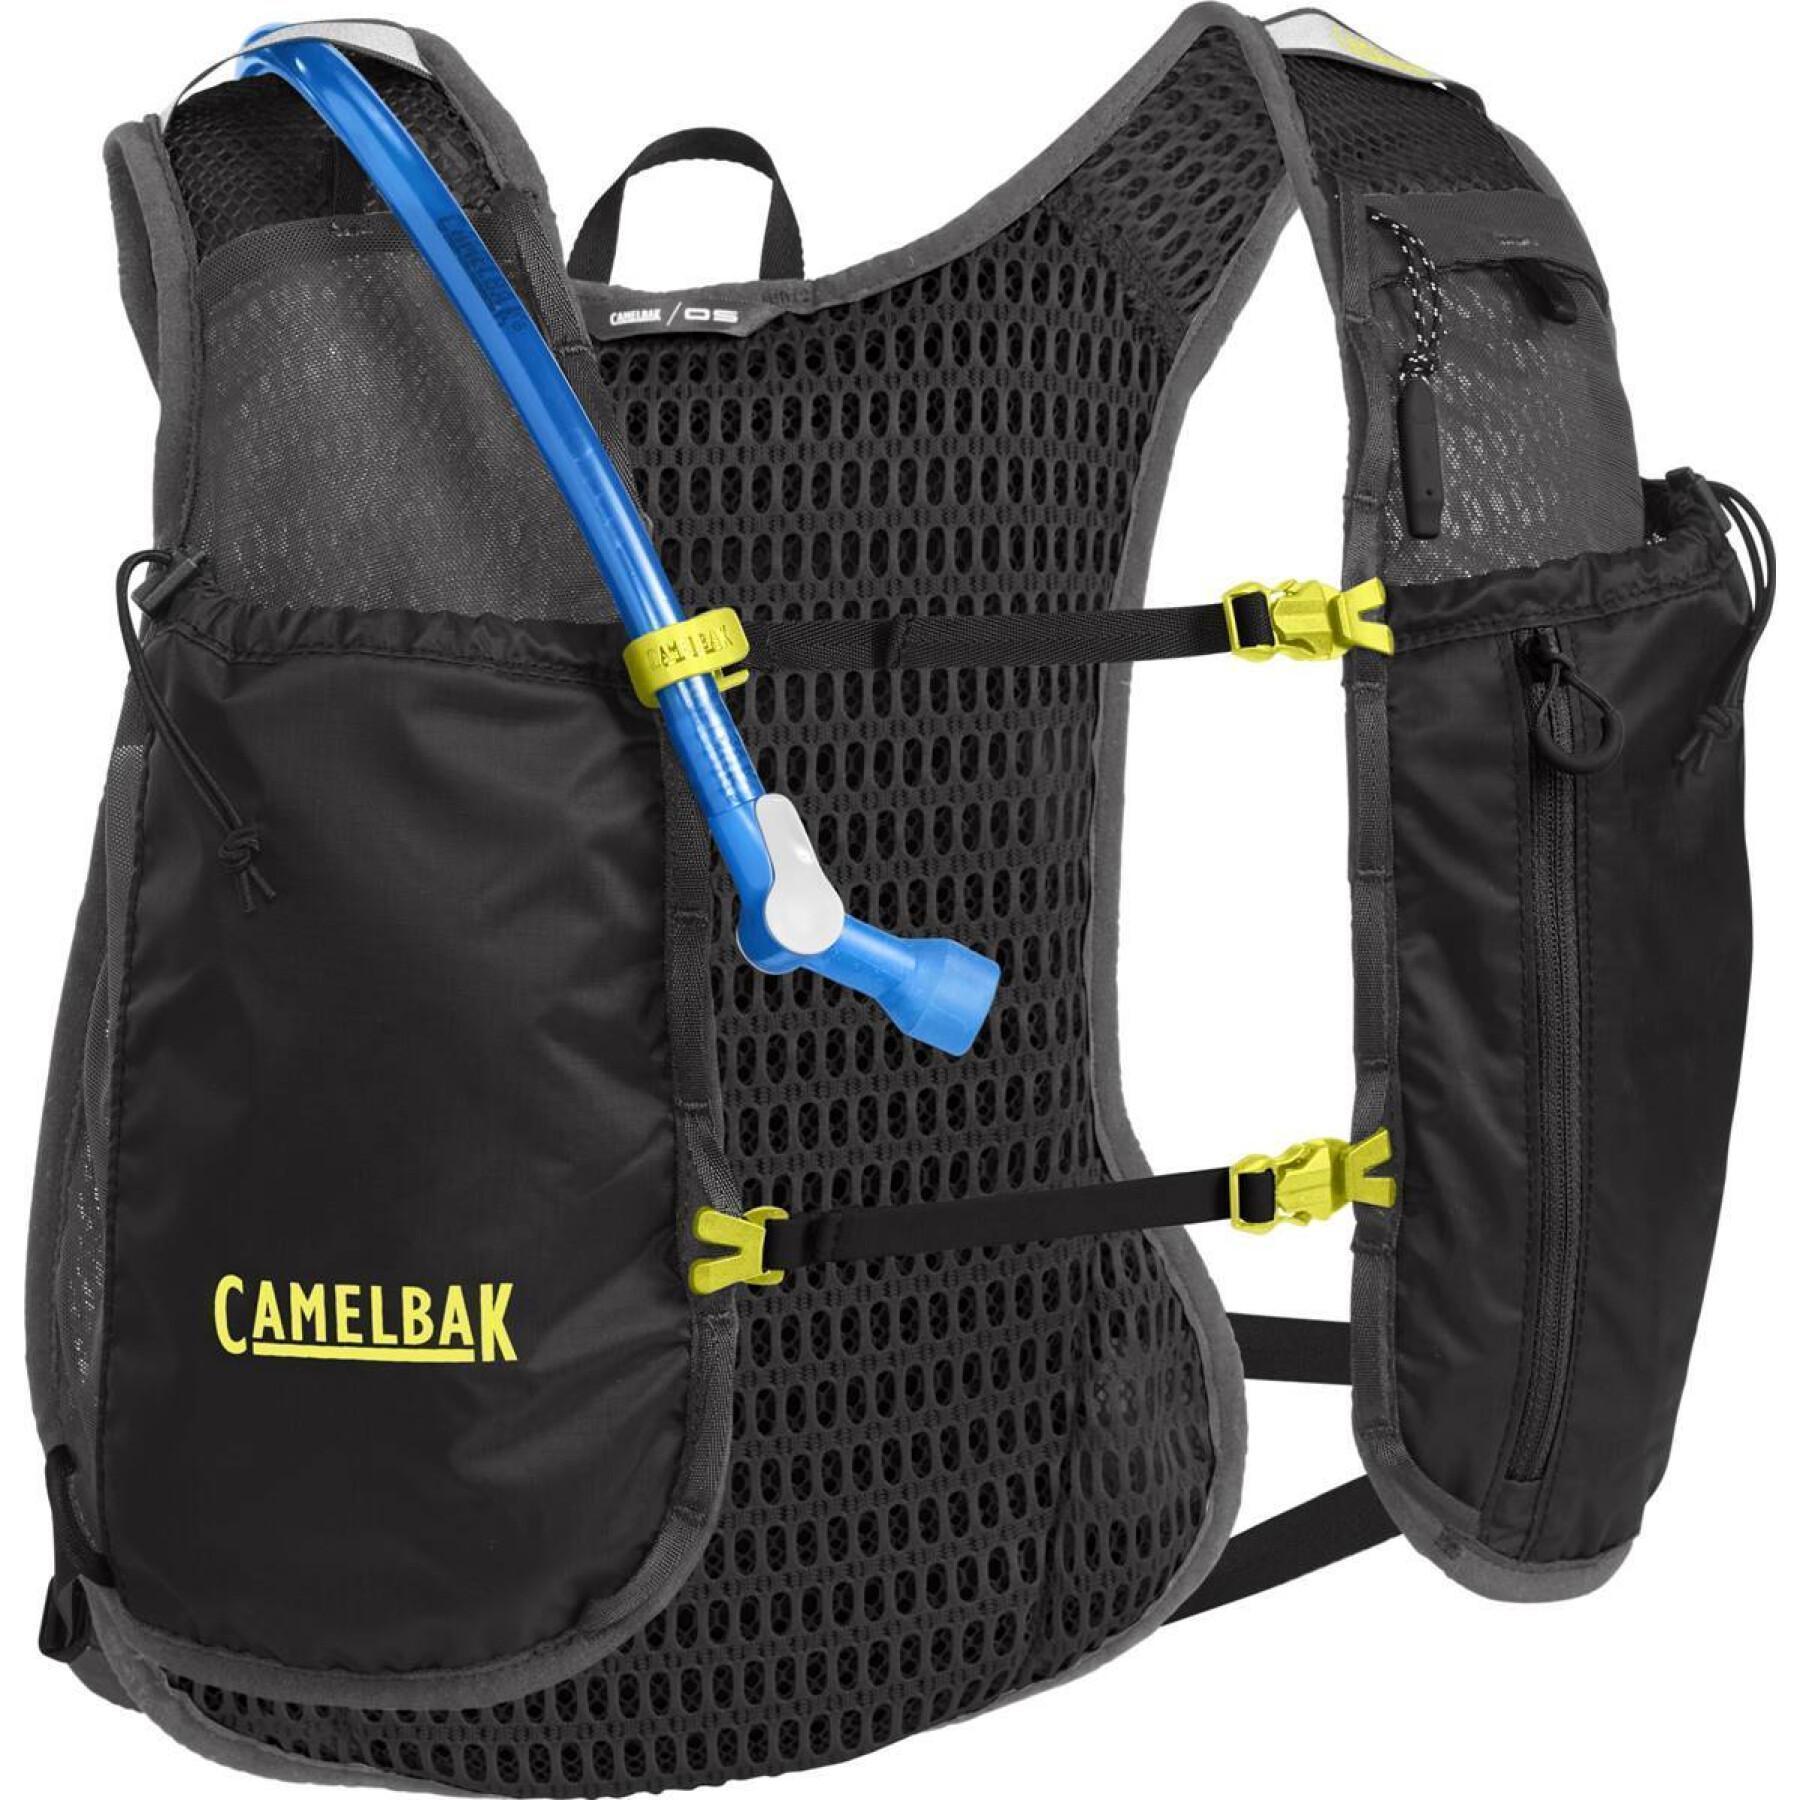 Hydration bag Camelbak Circuit Run Vest